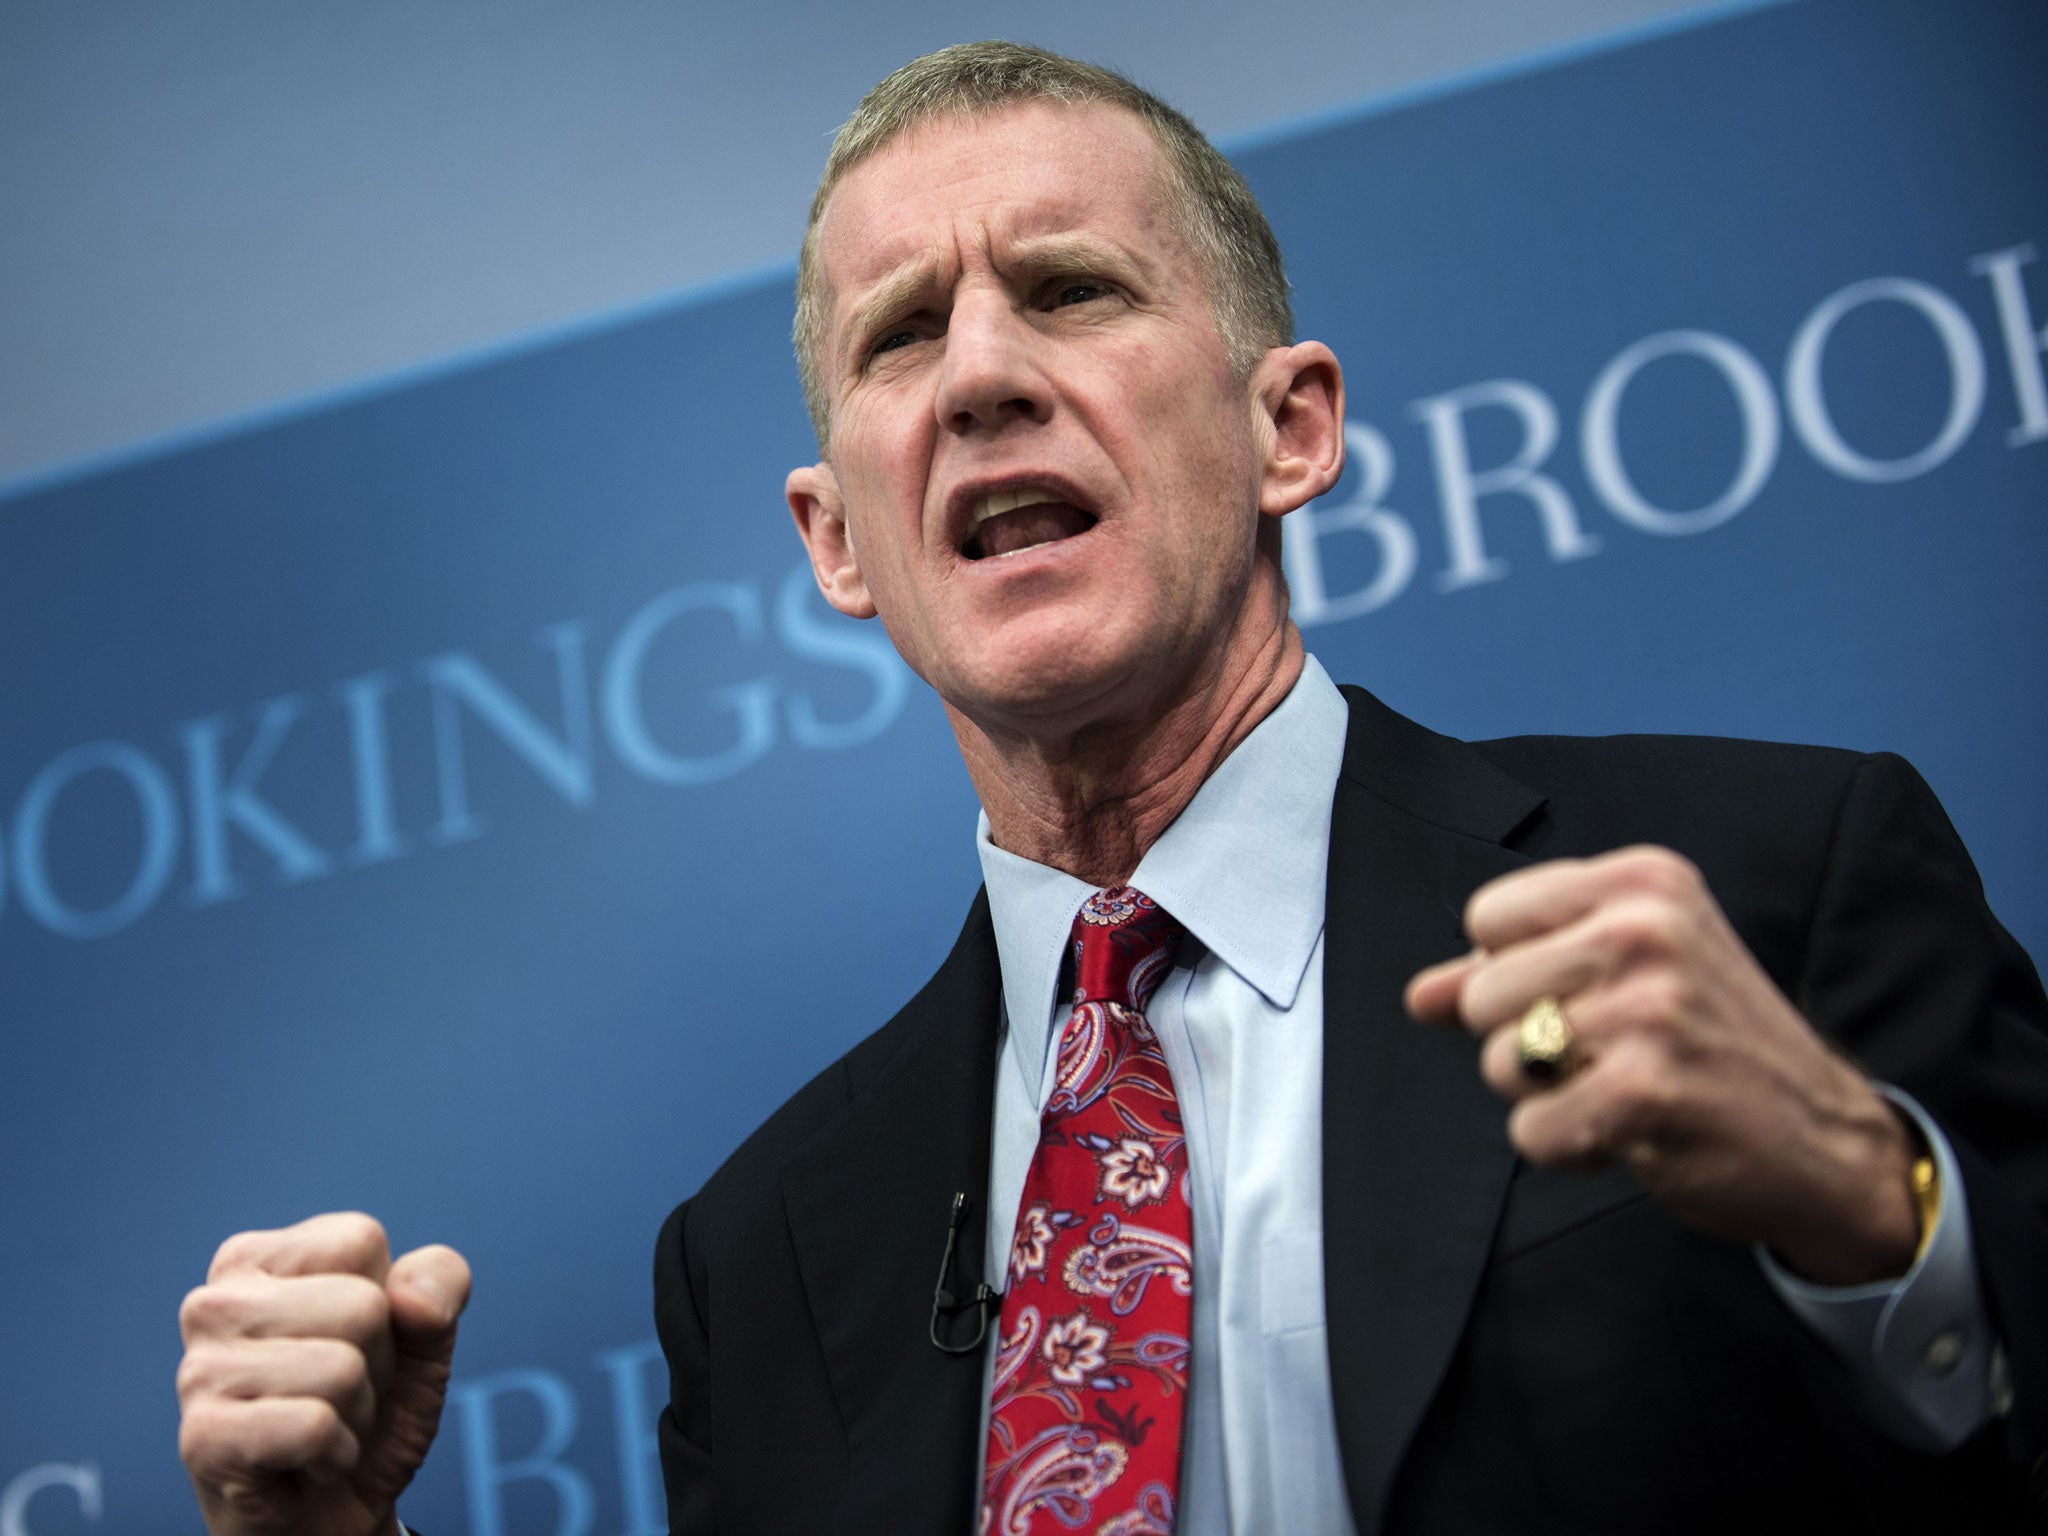 Retired US Army Commander Stanley McChrystal giving a speech last year in Washington, D.C.